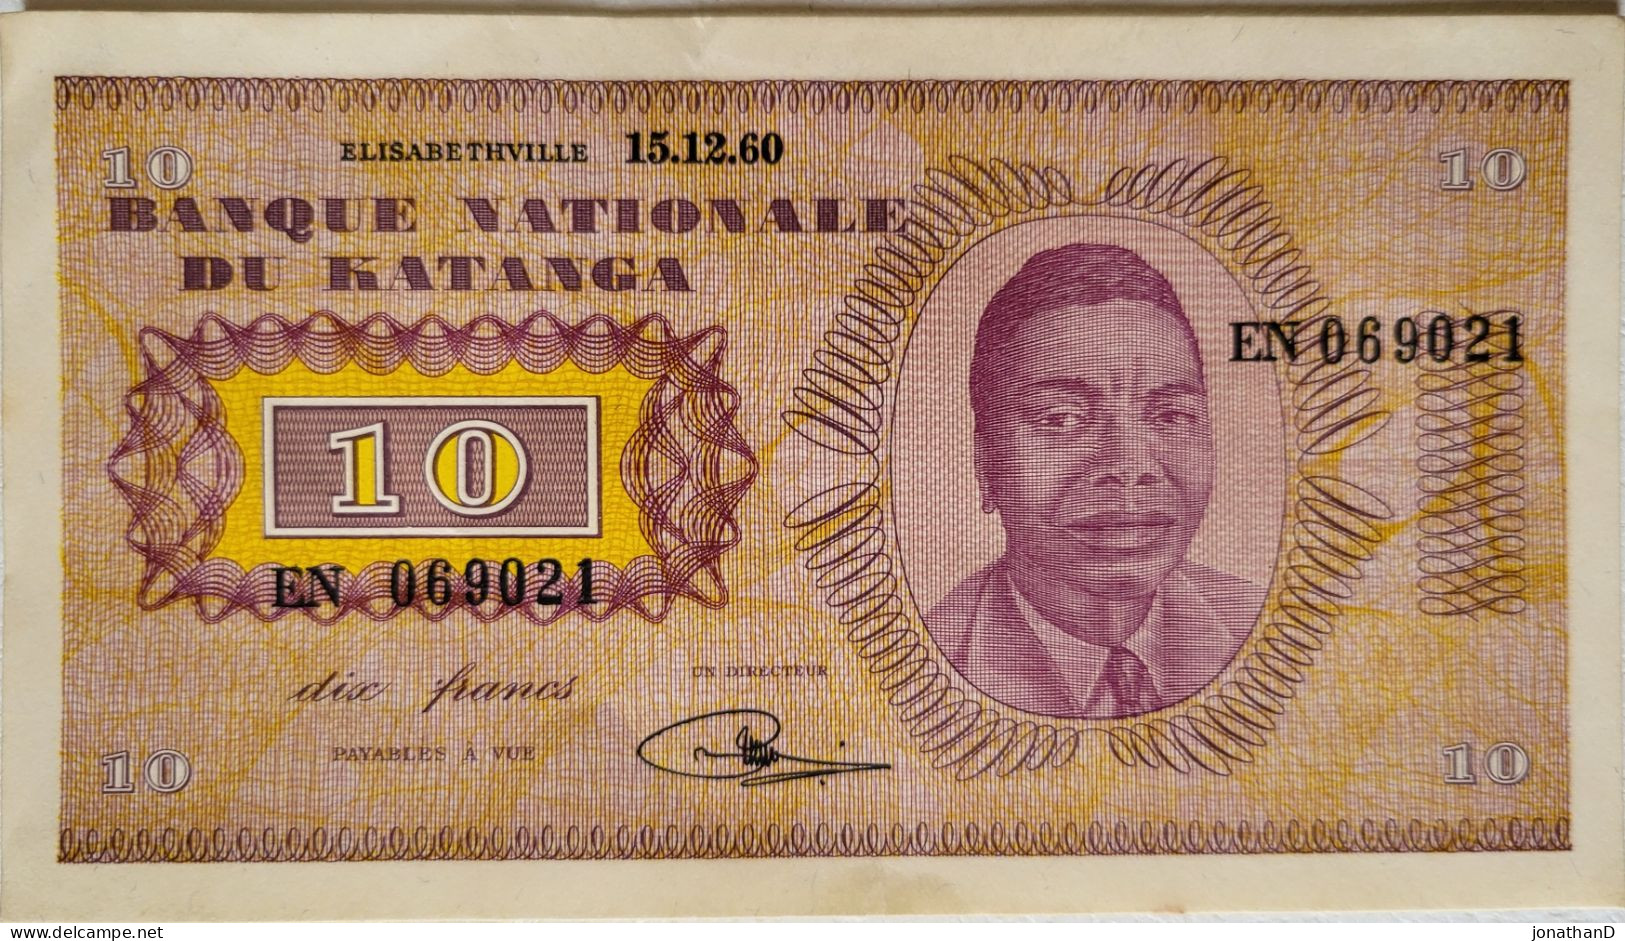 Lot 10 Francs Banque Nationale du Katanga de EN069015 à EN069024 état +++